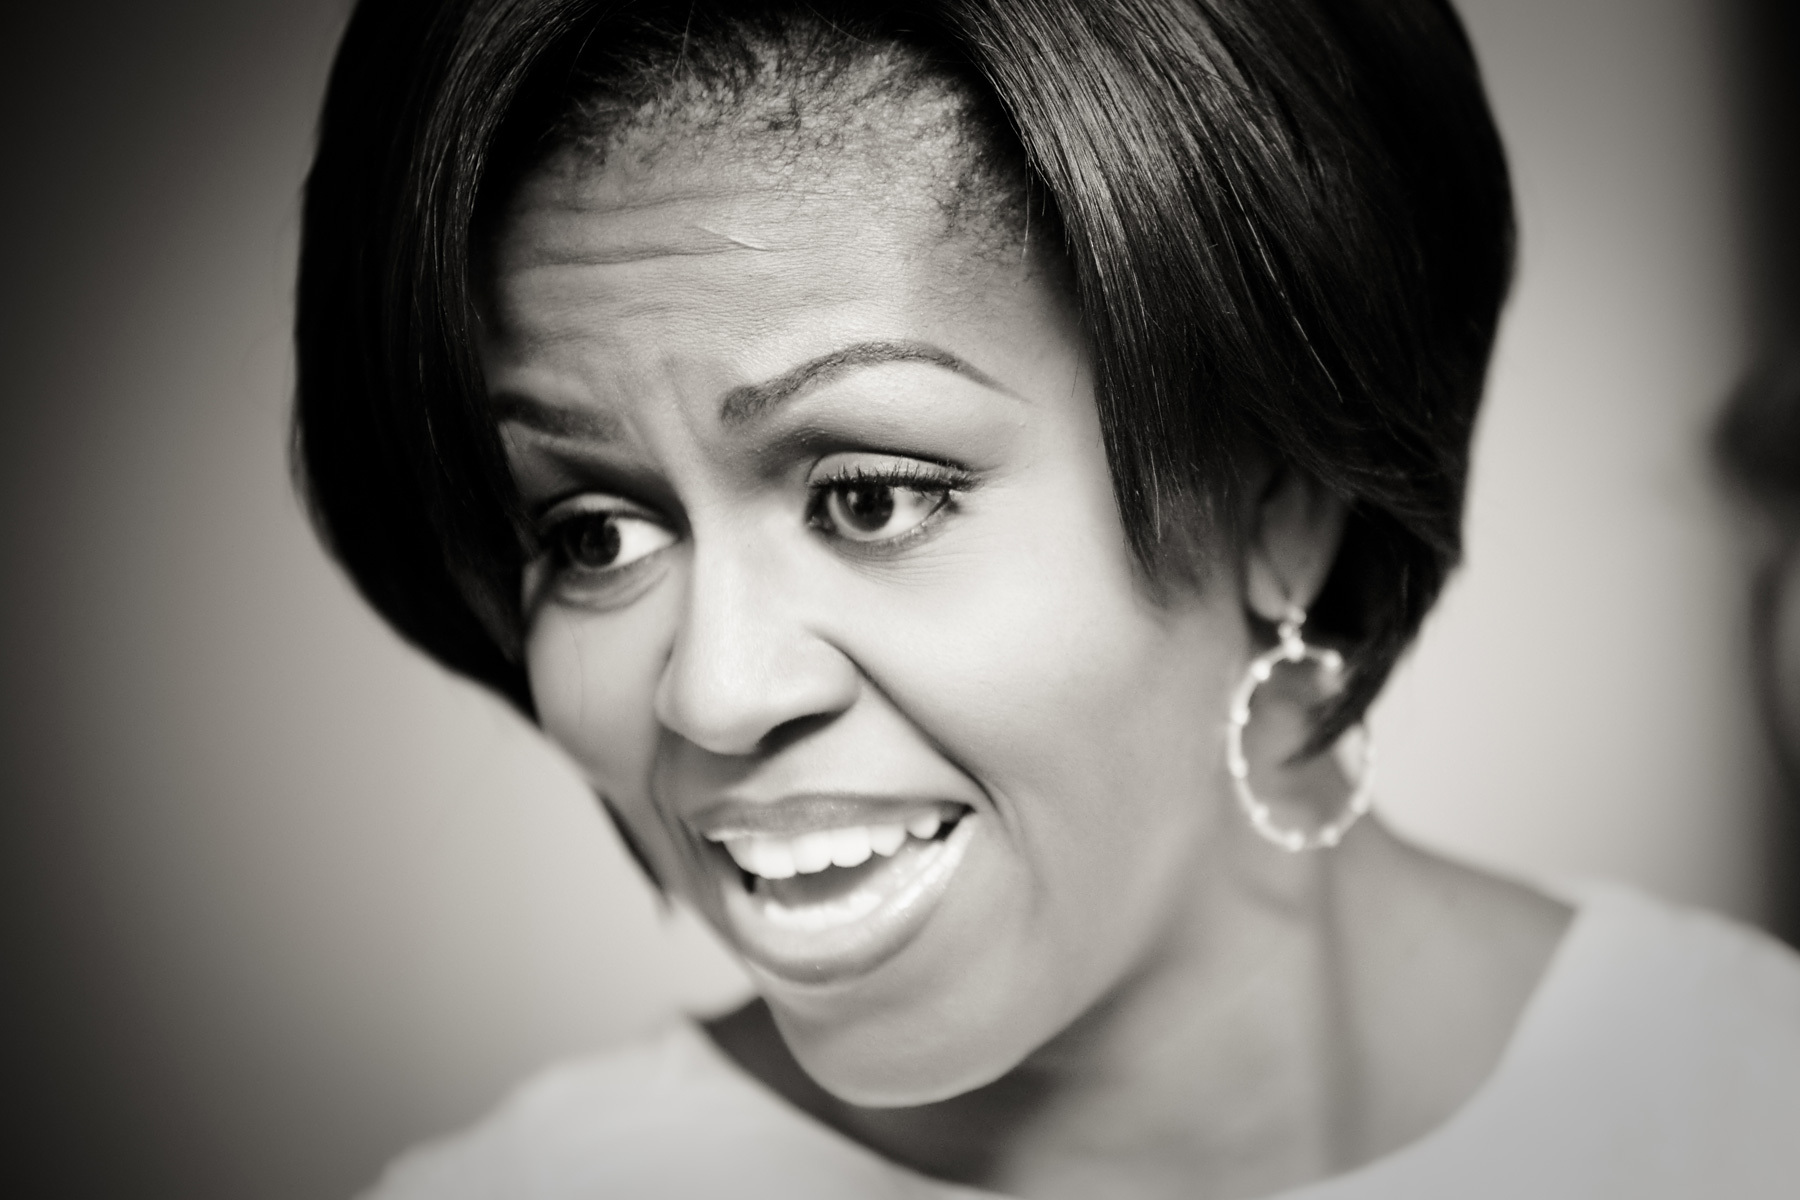 Michelle Obama Wallpaper - WallpaperSafari